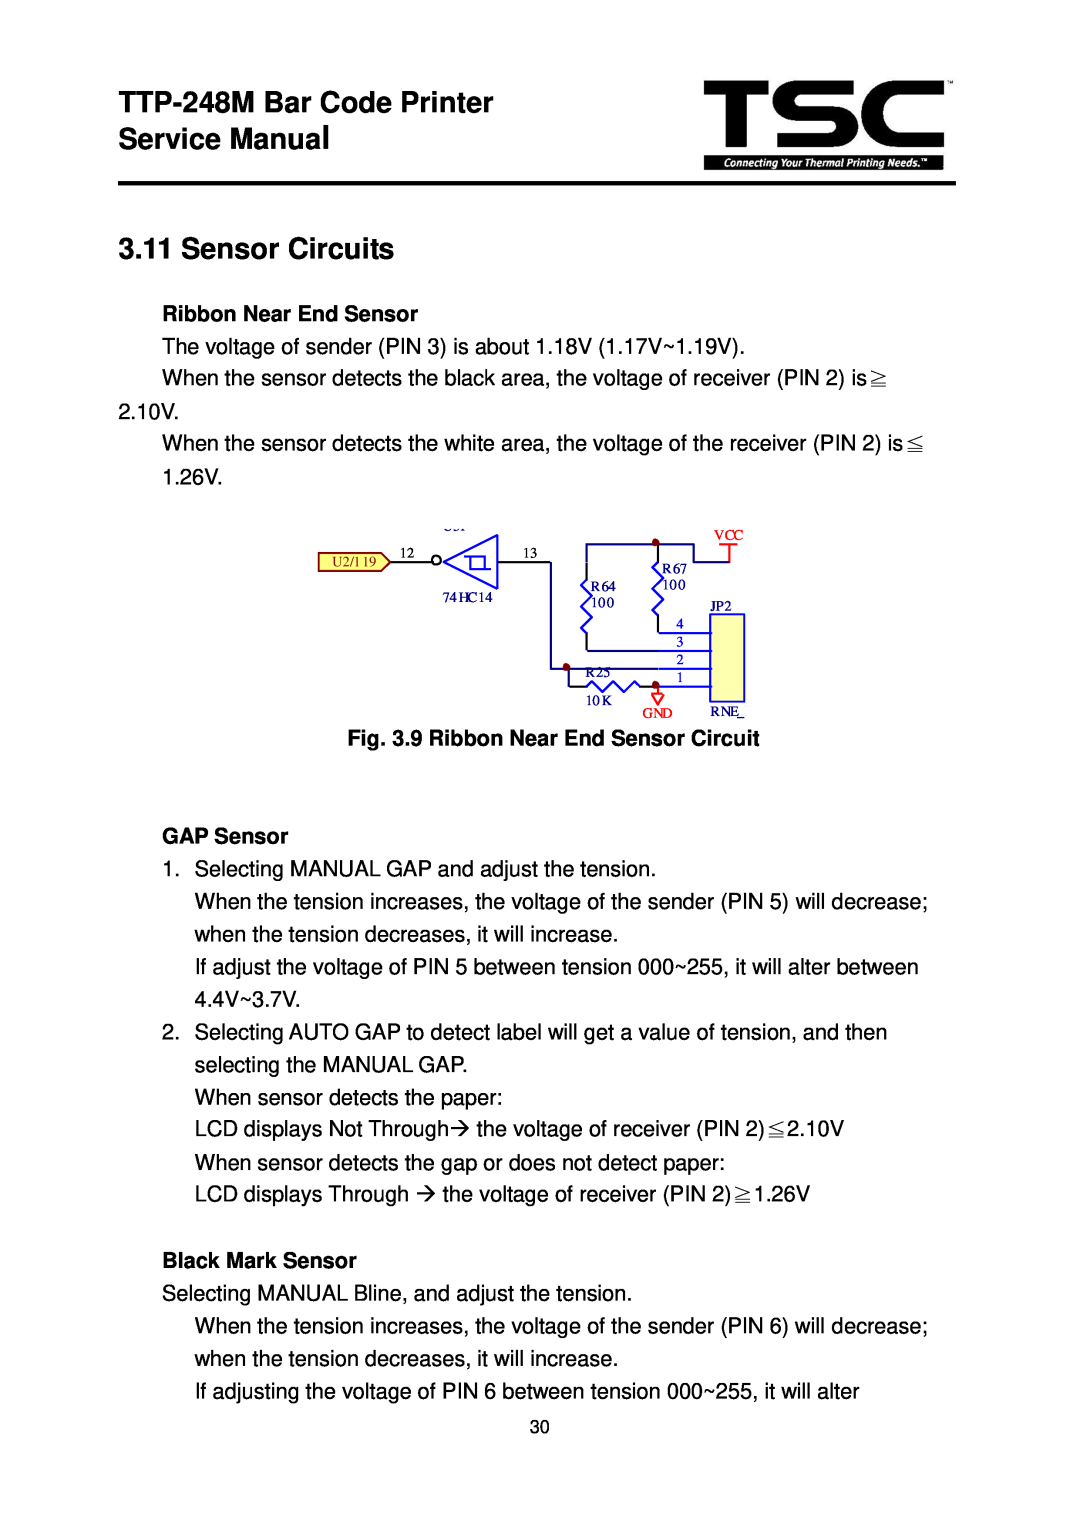 The Speaker Company TTP 248M TTP-248M Bar Code Printer Service Manual 3.11 Sensor Circuits, Ribbon Near End Sensor 